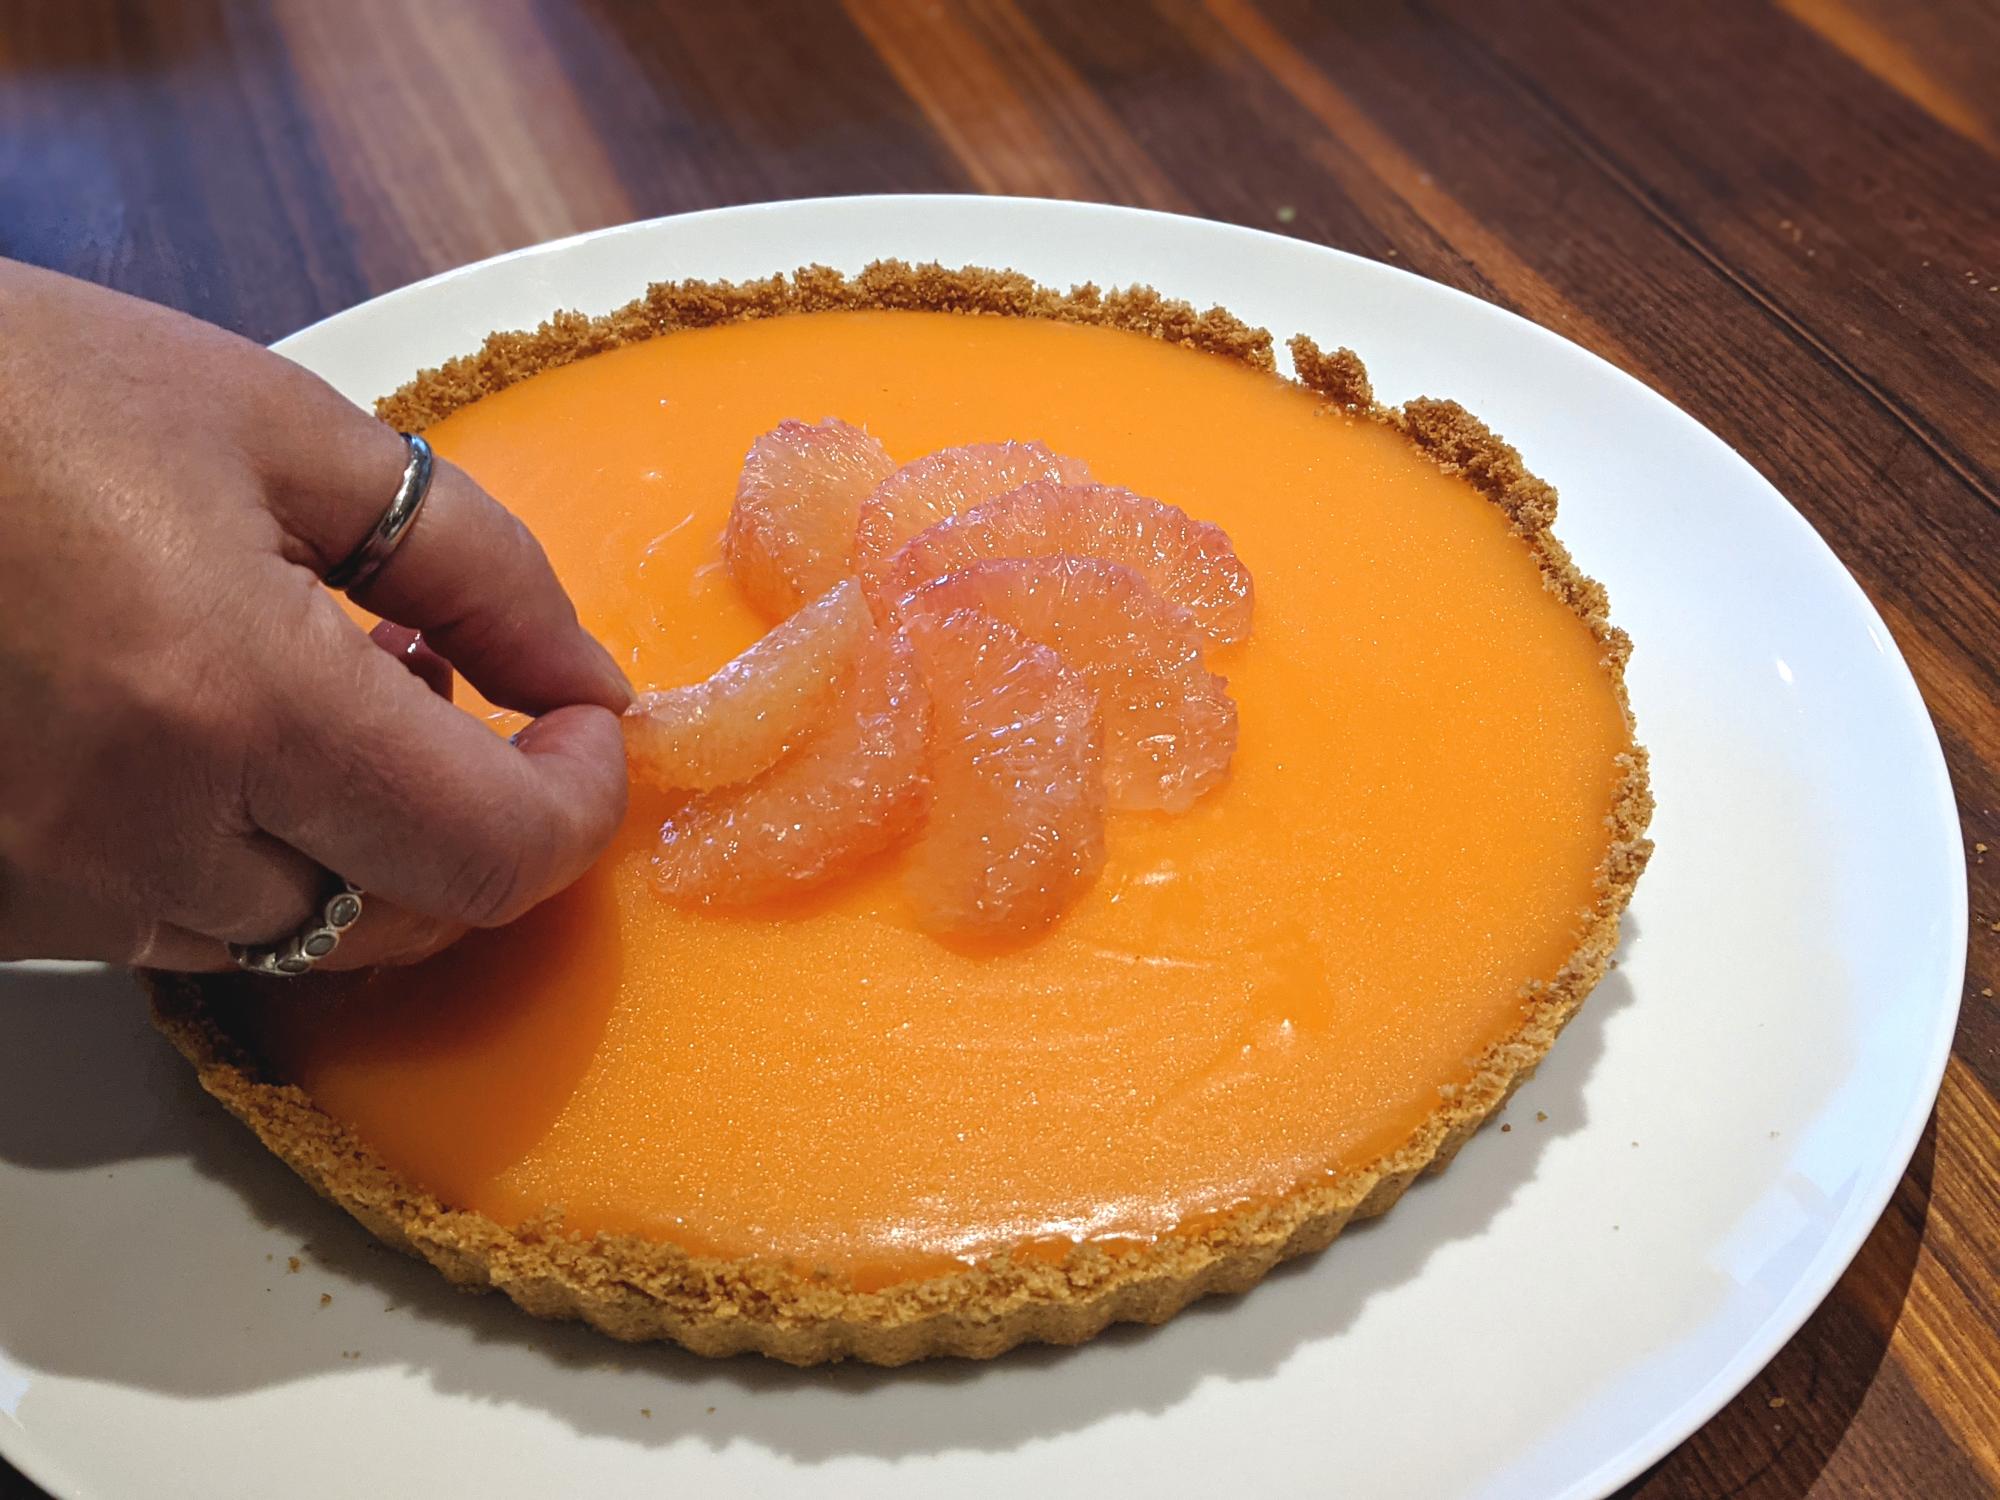 Placing the grapefruit on the tart.